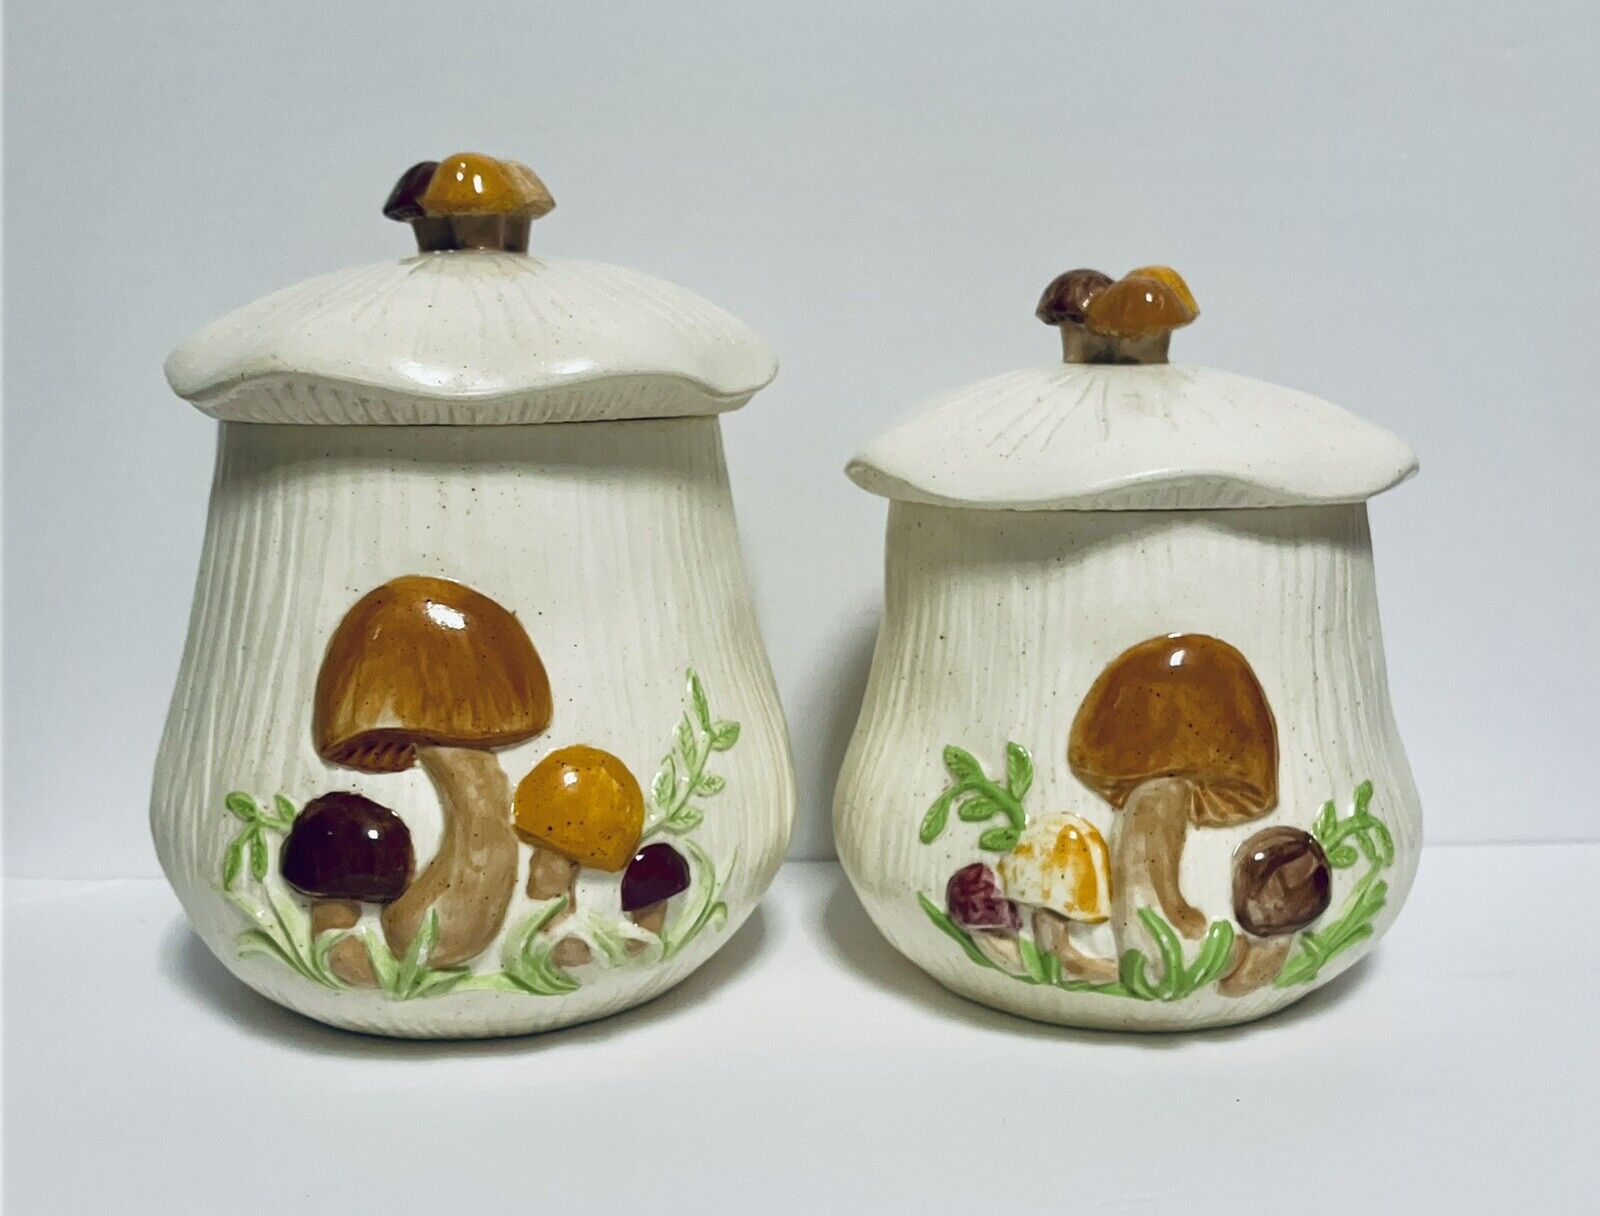 VTG Arnel's Ceramic Mushroom Canister Set of 2 Cream Earth Tone Colors Signed